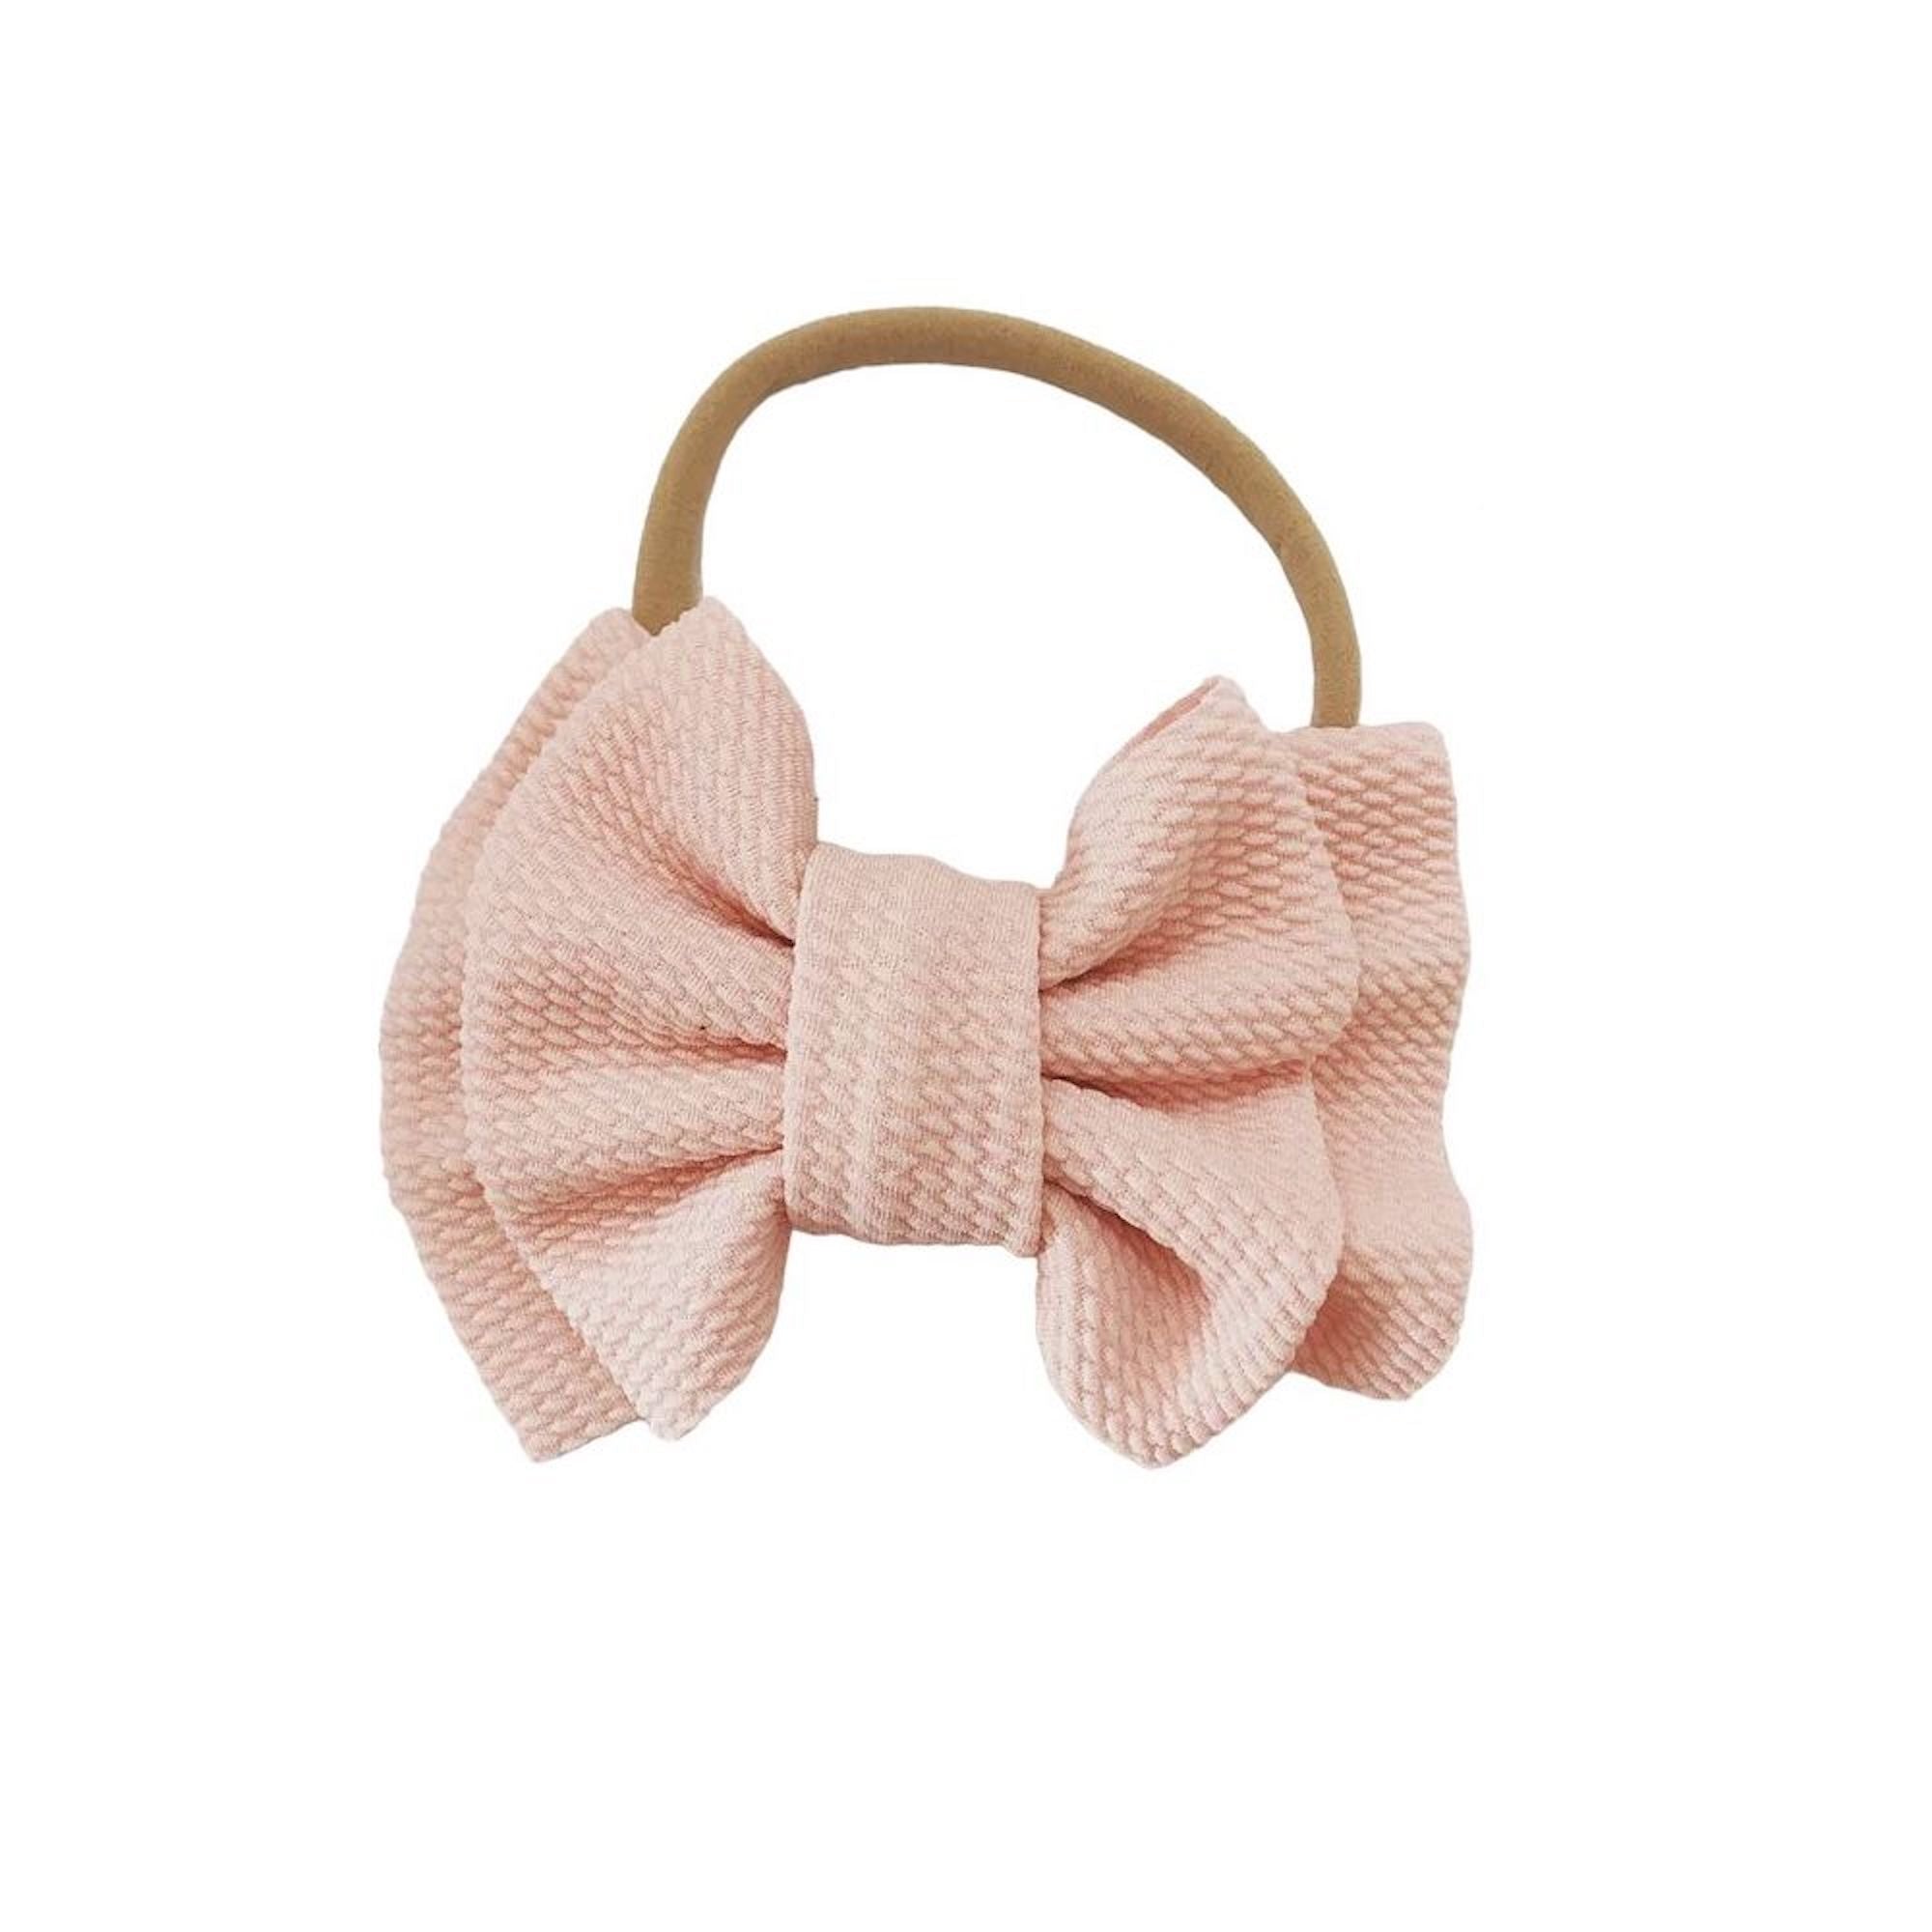 Big Bow Headband | Baby Girl Headband | Toddler Headband | Soft Headband For Girls | Gifts For Girls | Hair Accessories Girls | Pink Headband Girls